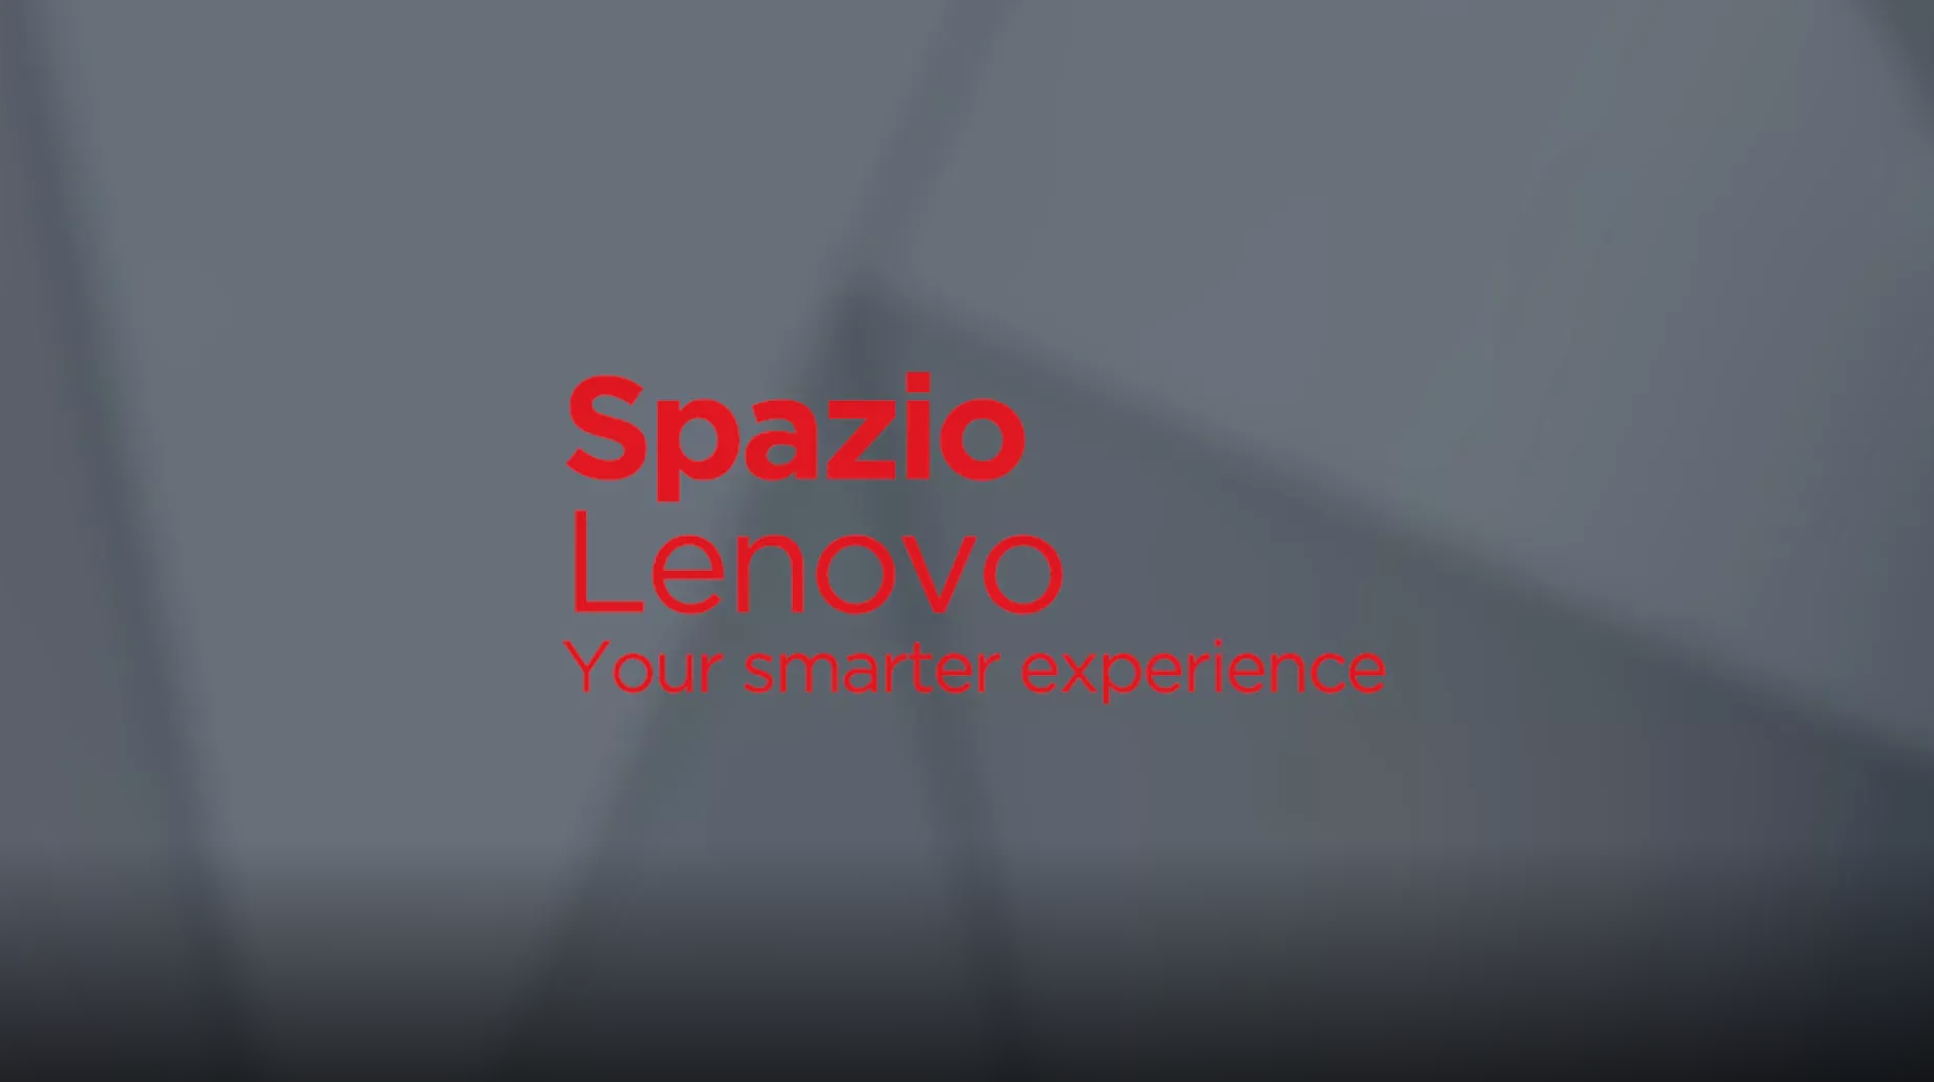 Spazio Lenovo